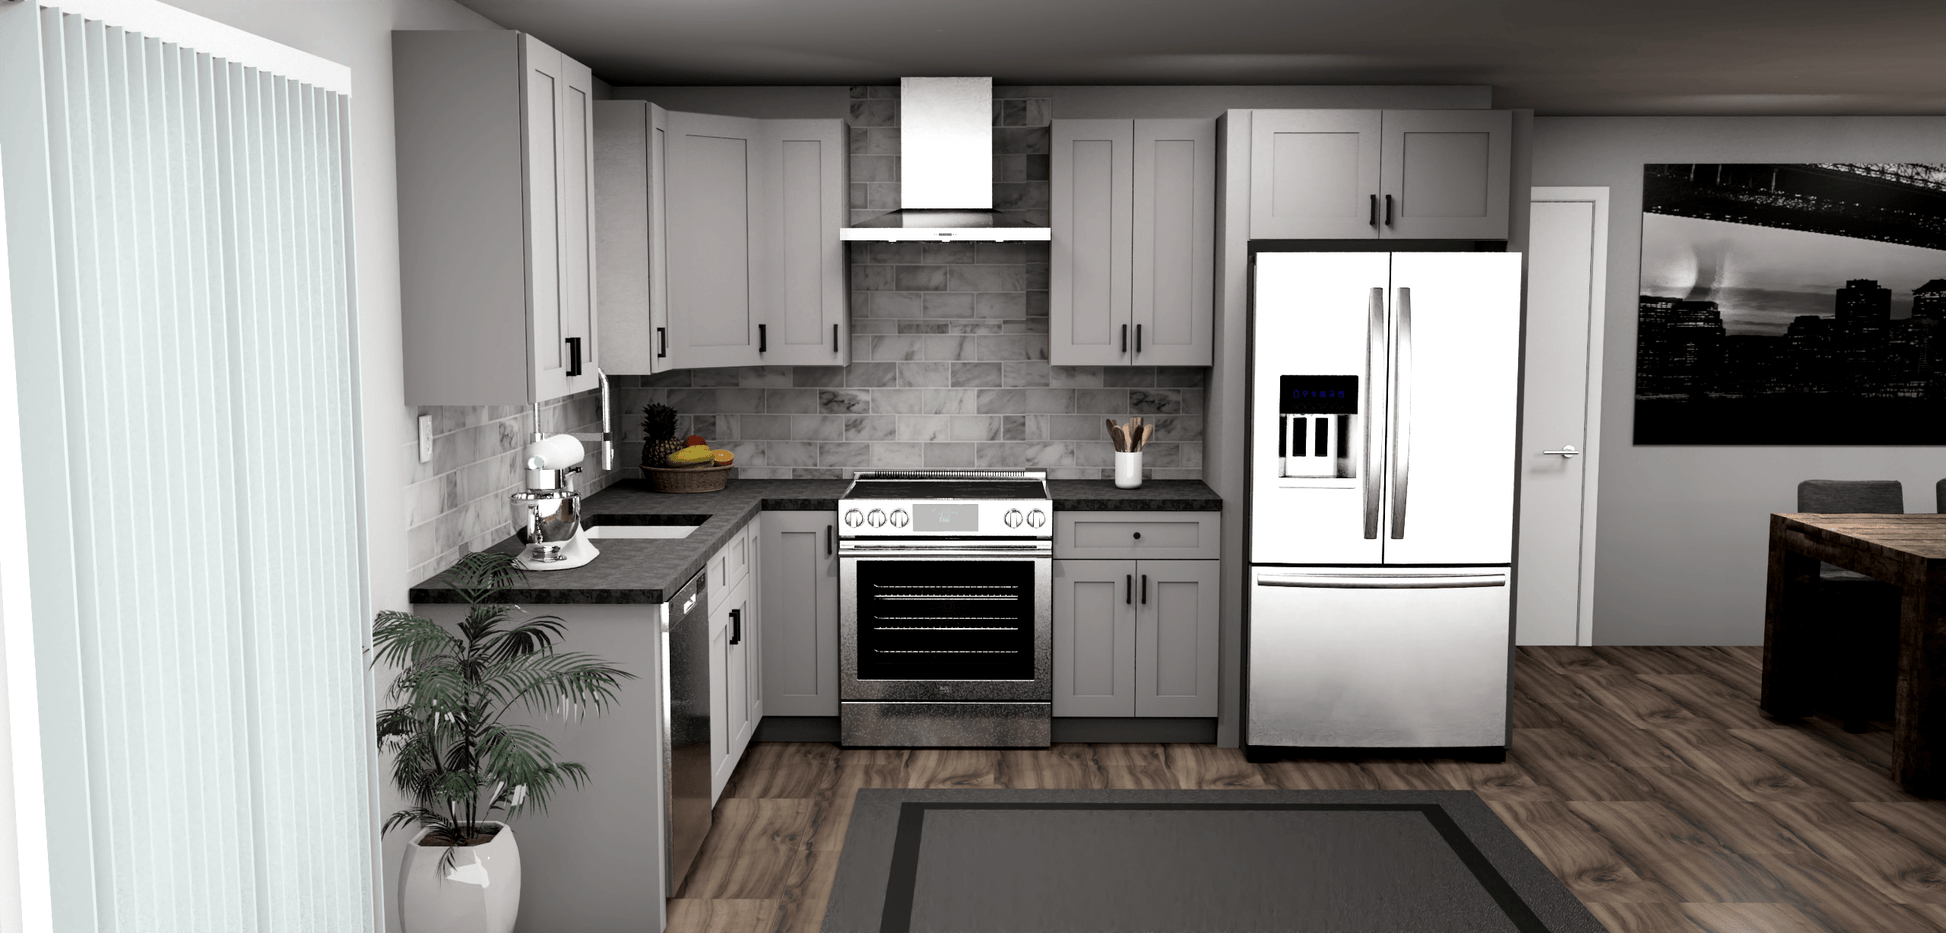 Fabuwood Allure Galaxy Nickel 8 x 11 L Shaped Kitchen Front Layout Photo